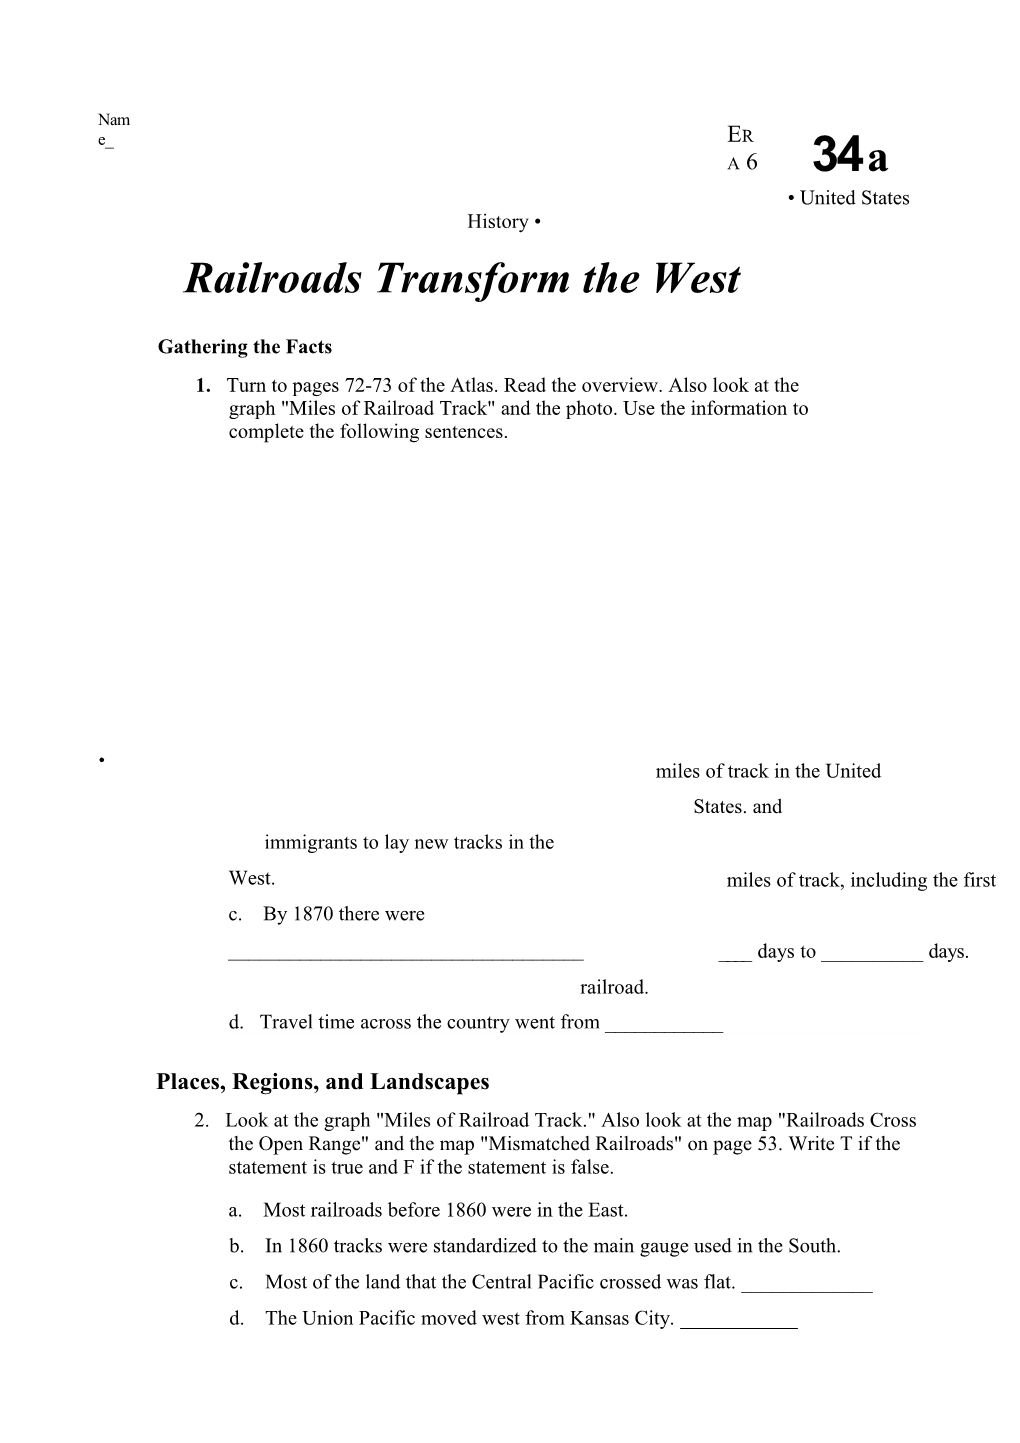 Railroads Transform the West